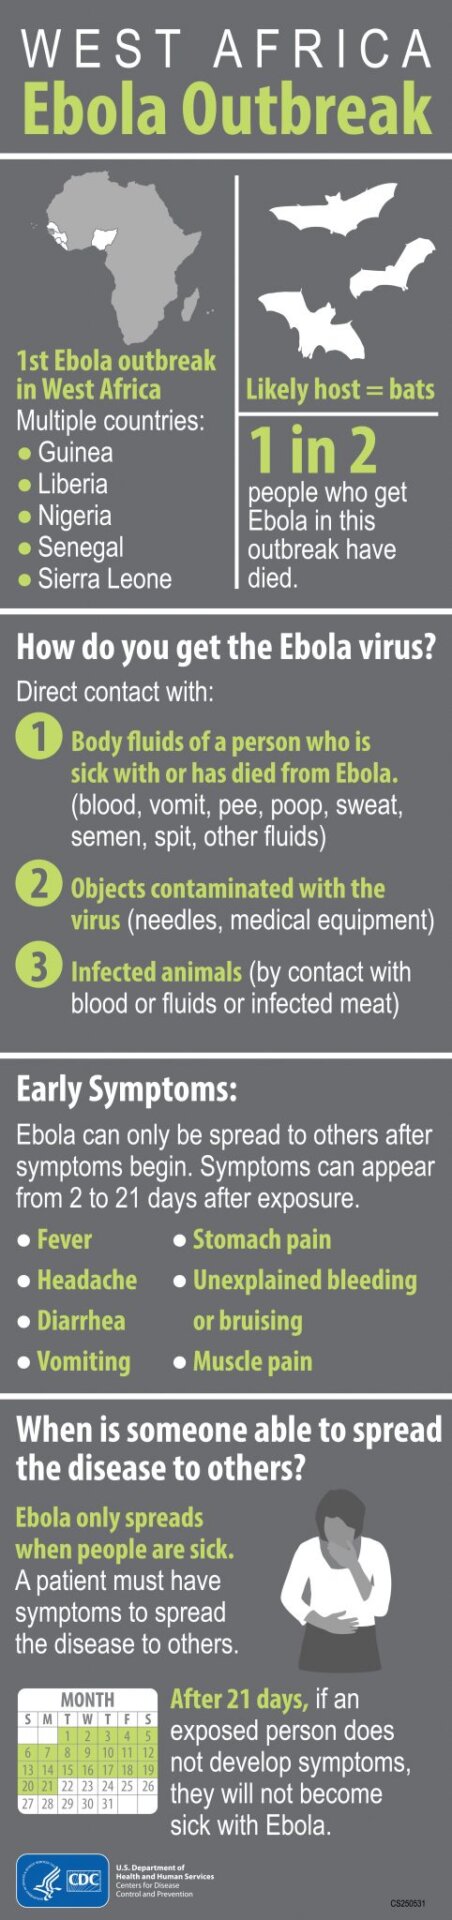 2014 West Africa Ebola Outbreak